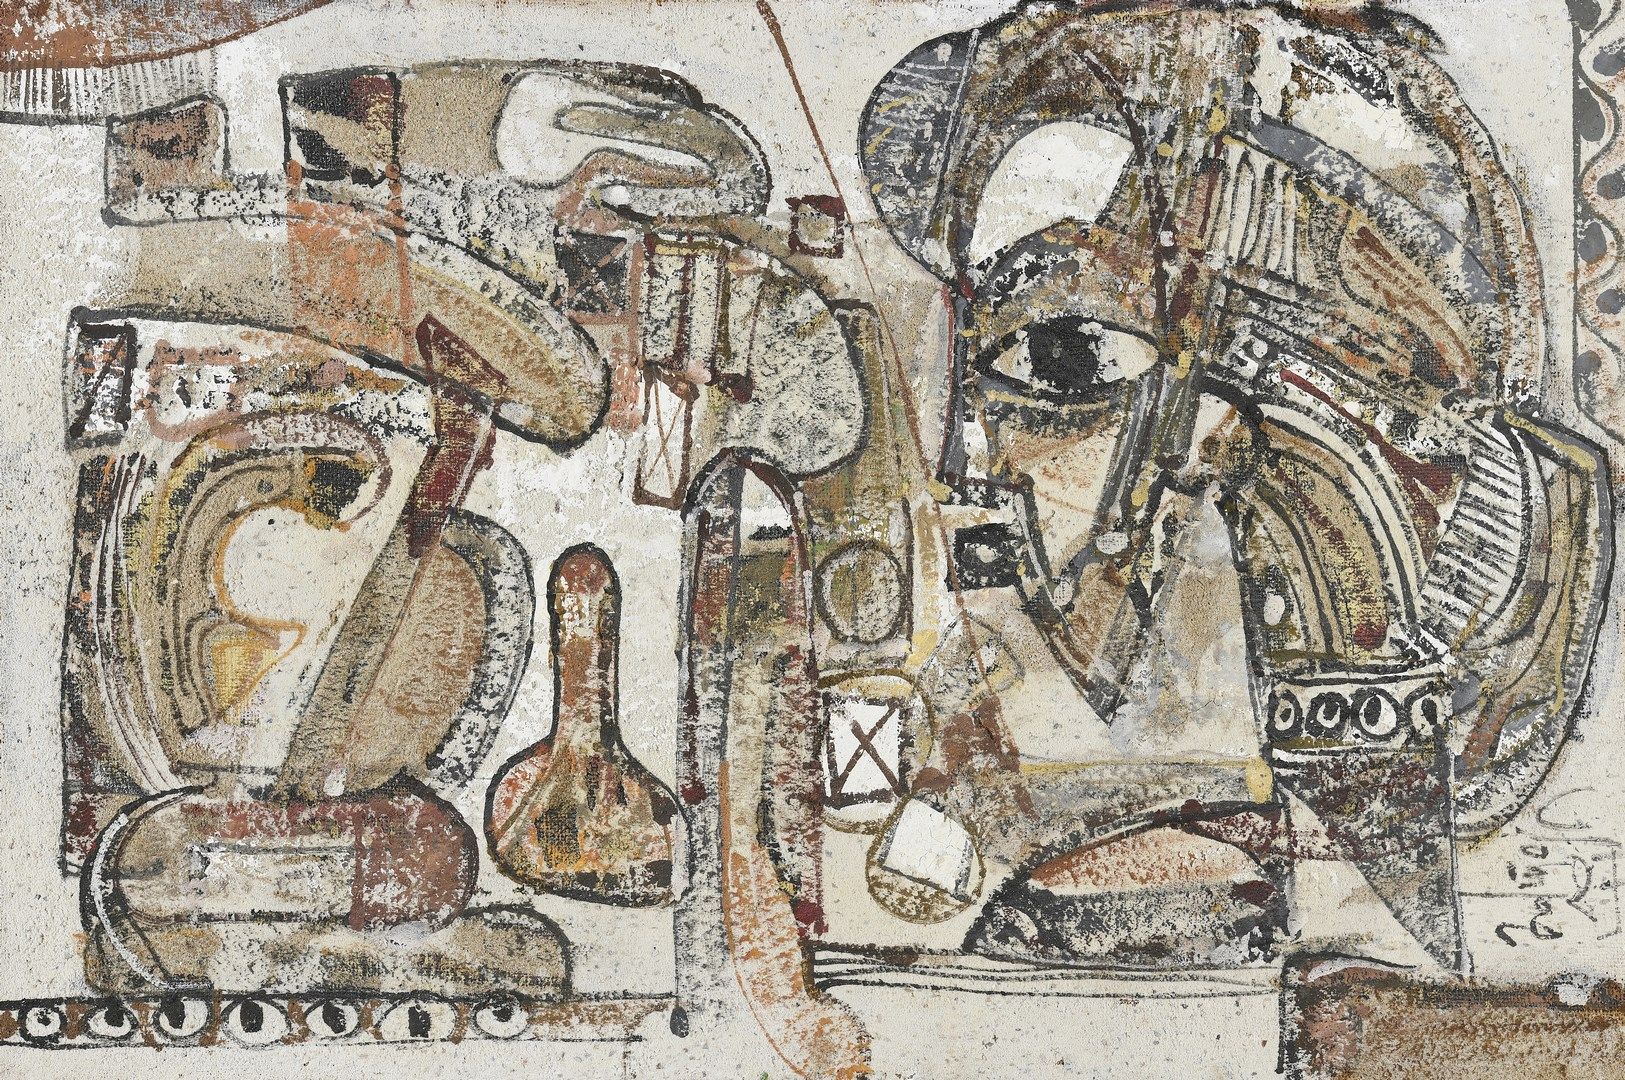 Null ADINGRA 乔治-埃布林，1933-2005

带面具的构图

混合媒体和画布上的颜料

右下方有签名

54 x 81 cm